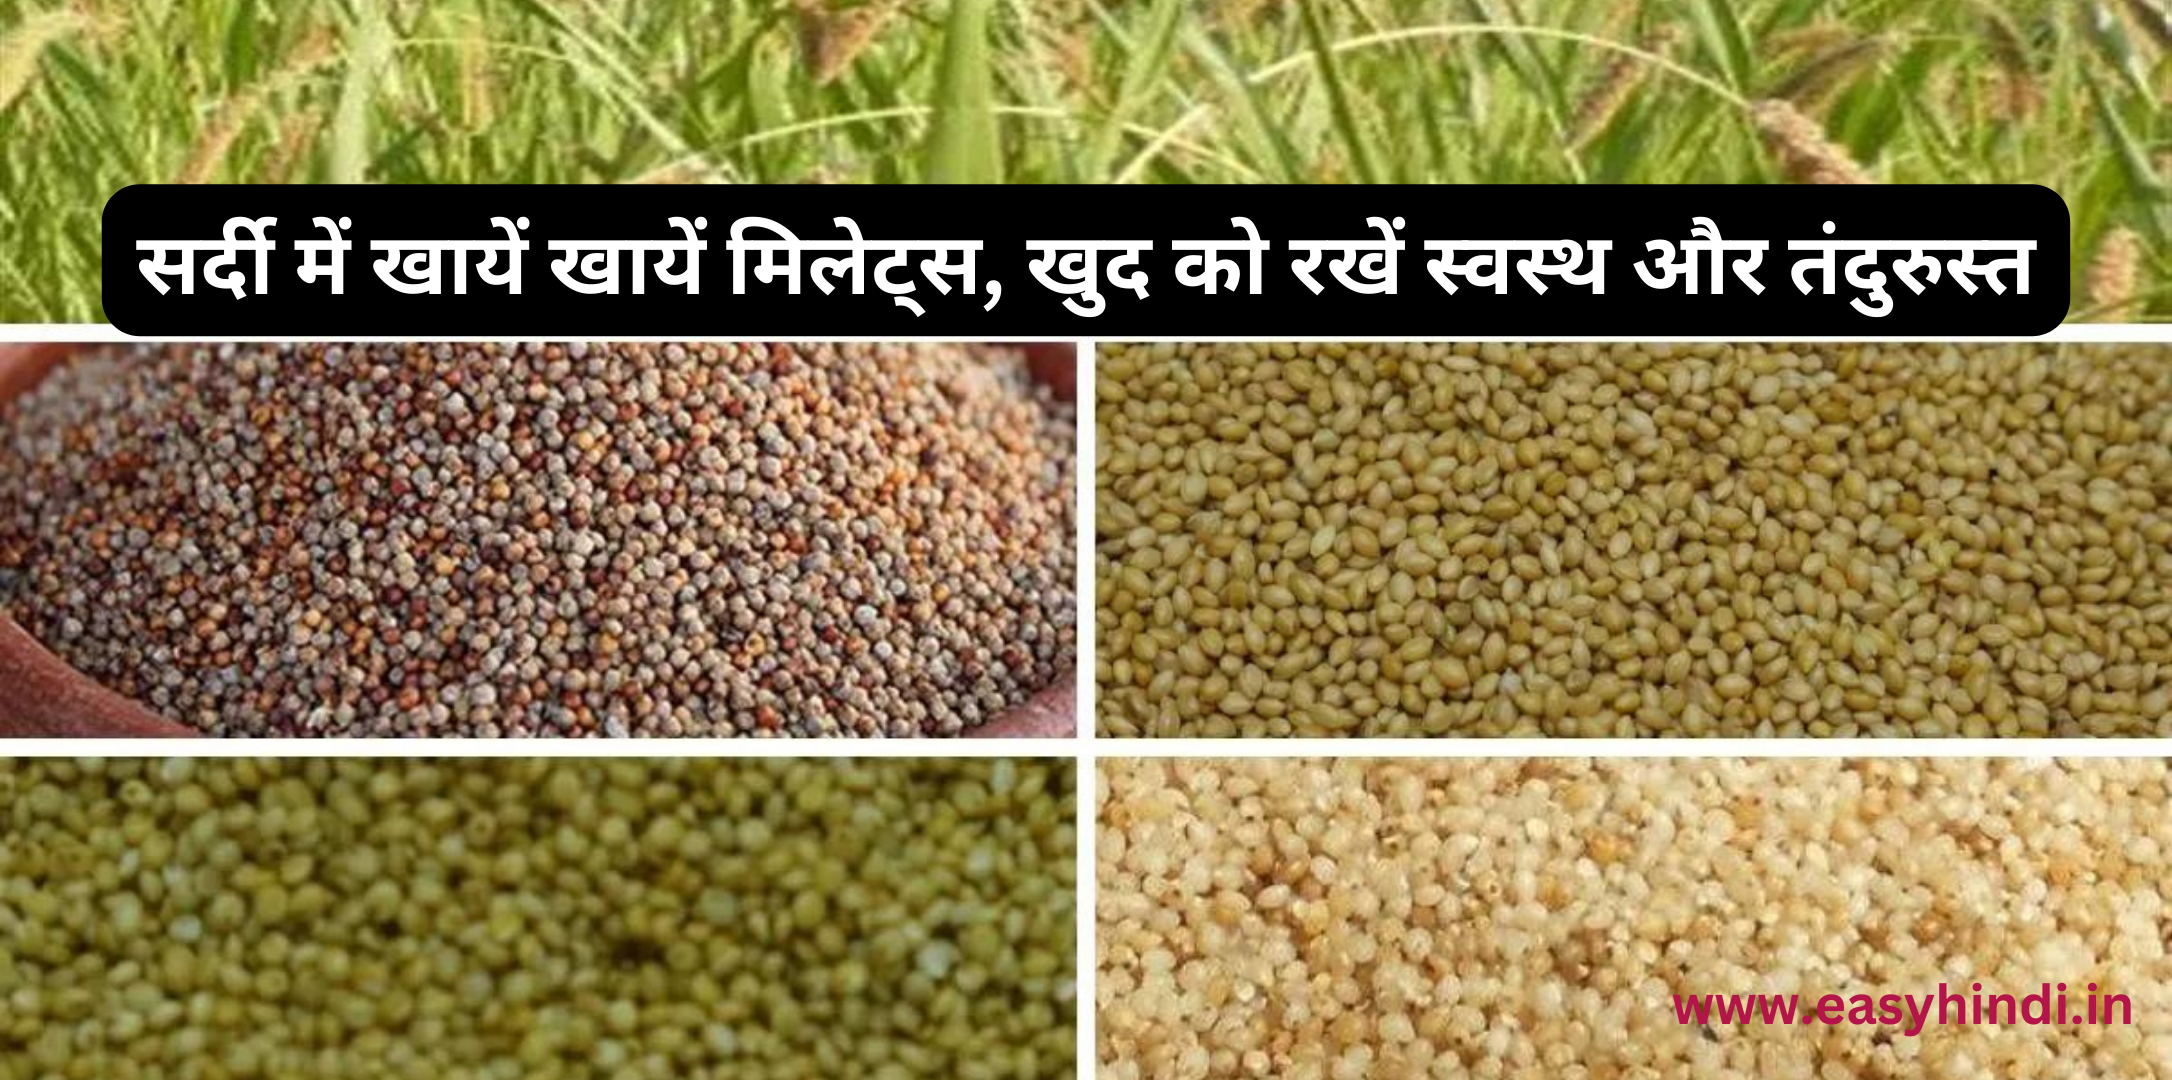 Millet in hindi